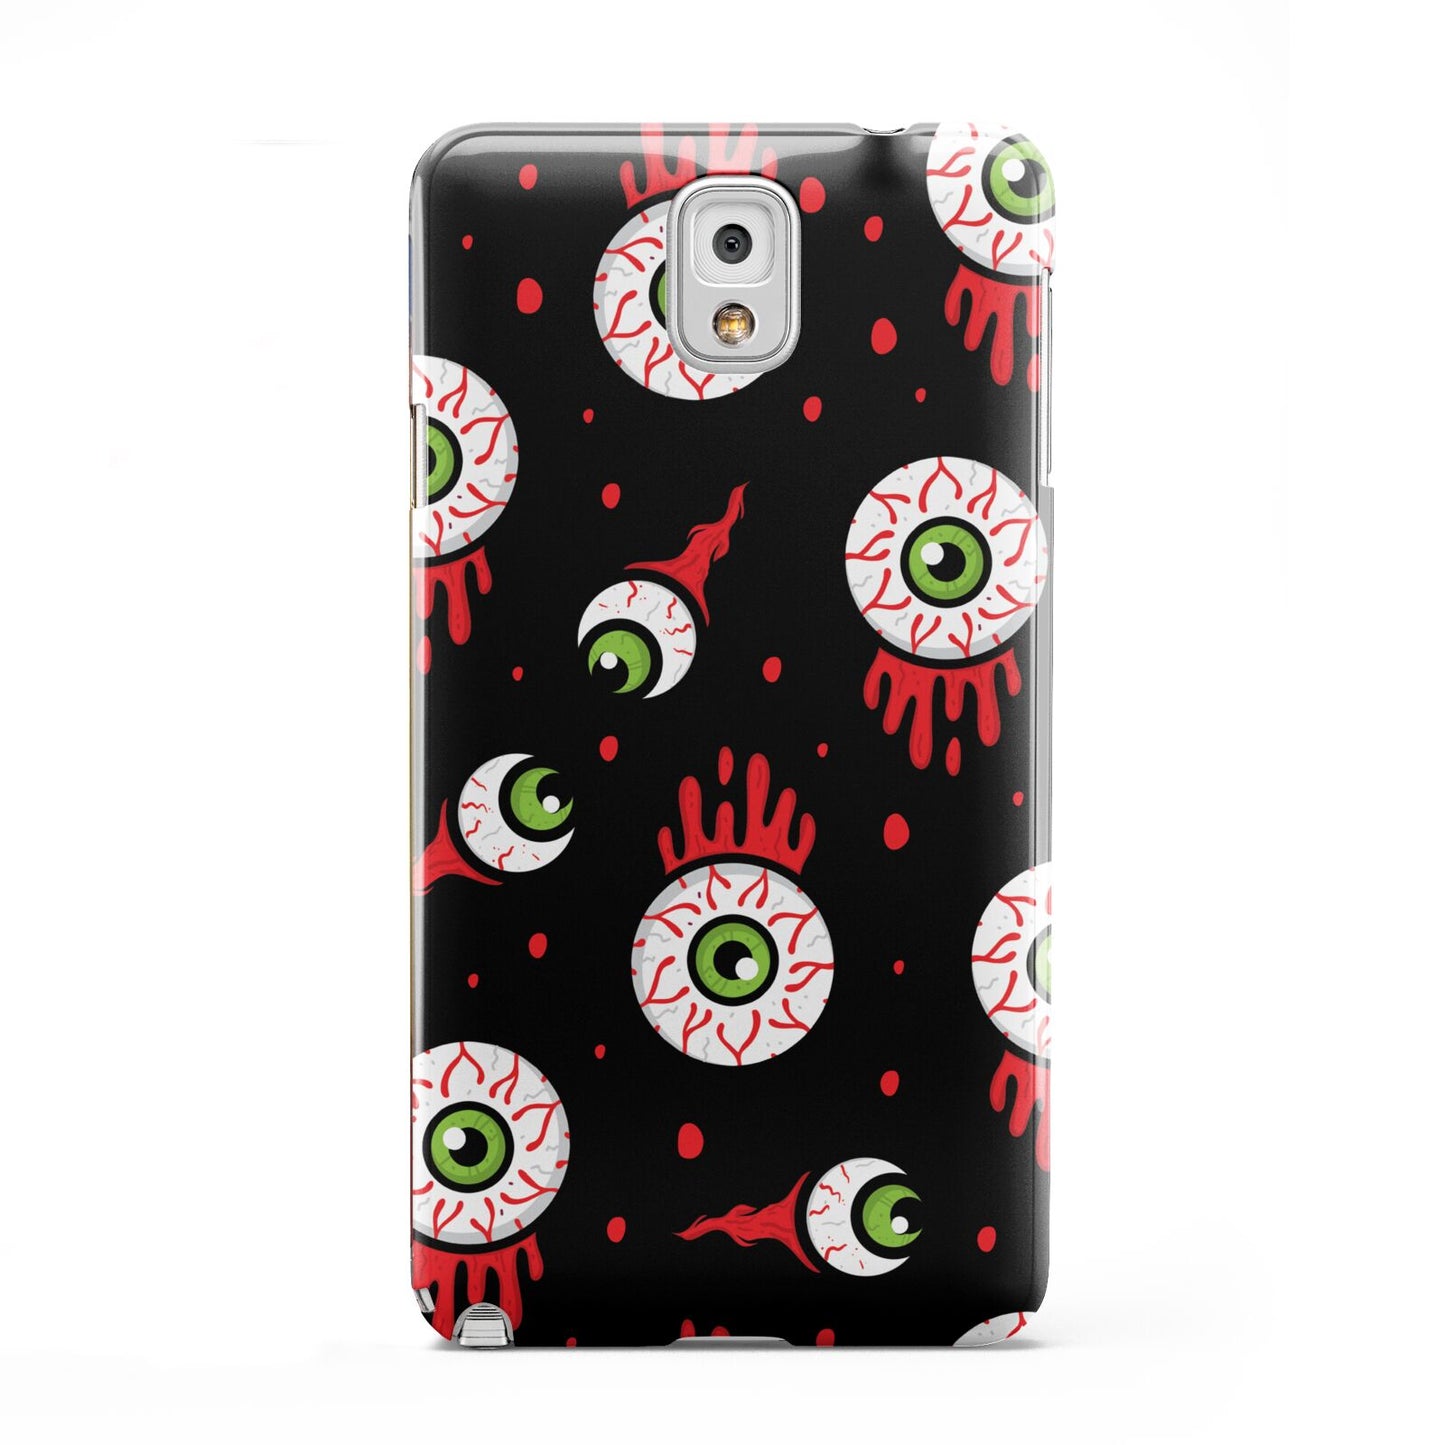 Bleeding Eyeballs Samsung Galaxy Note 3 Case